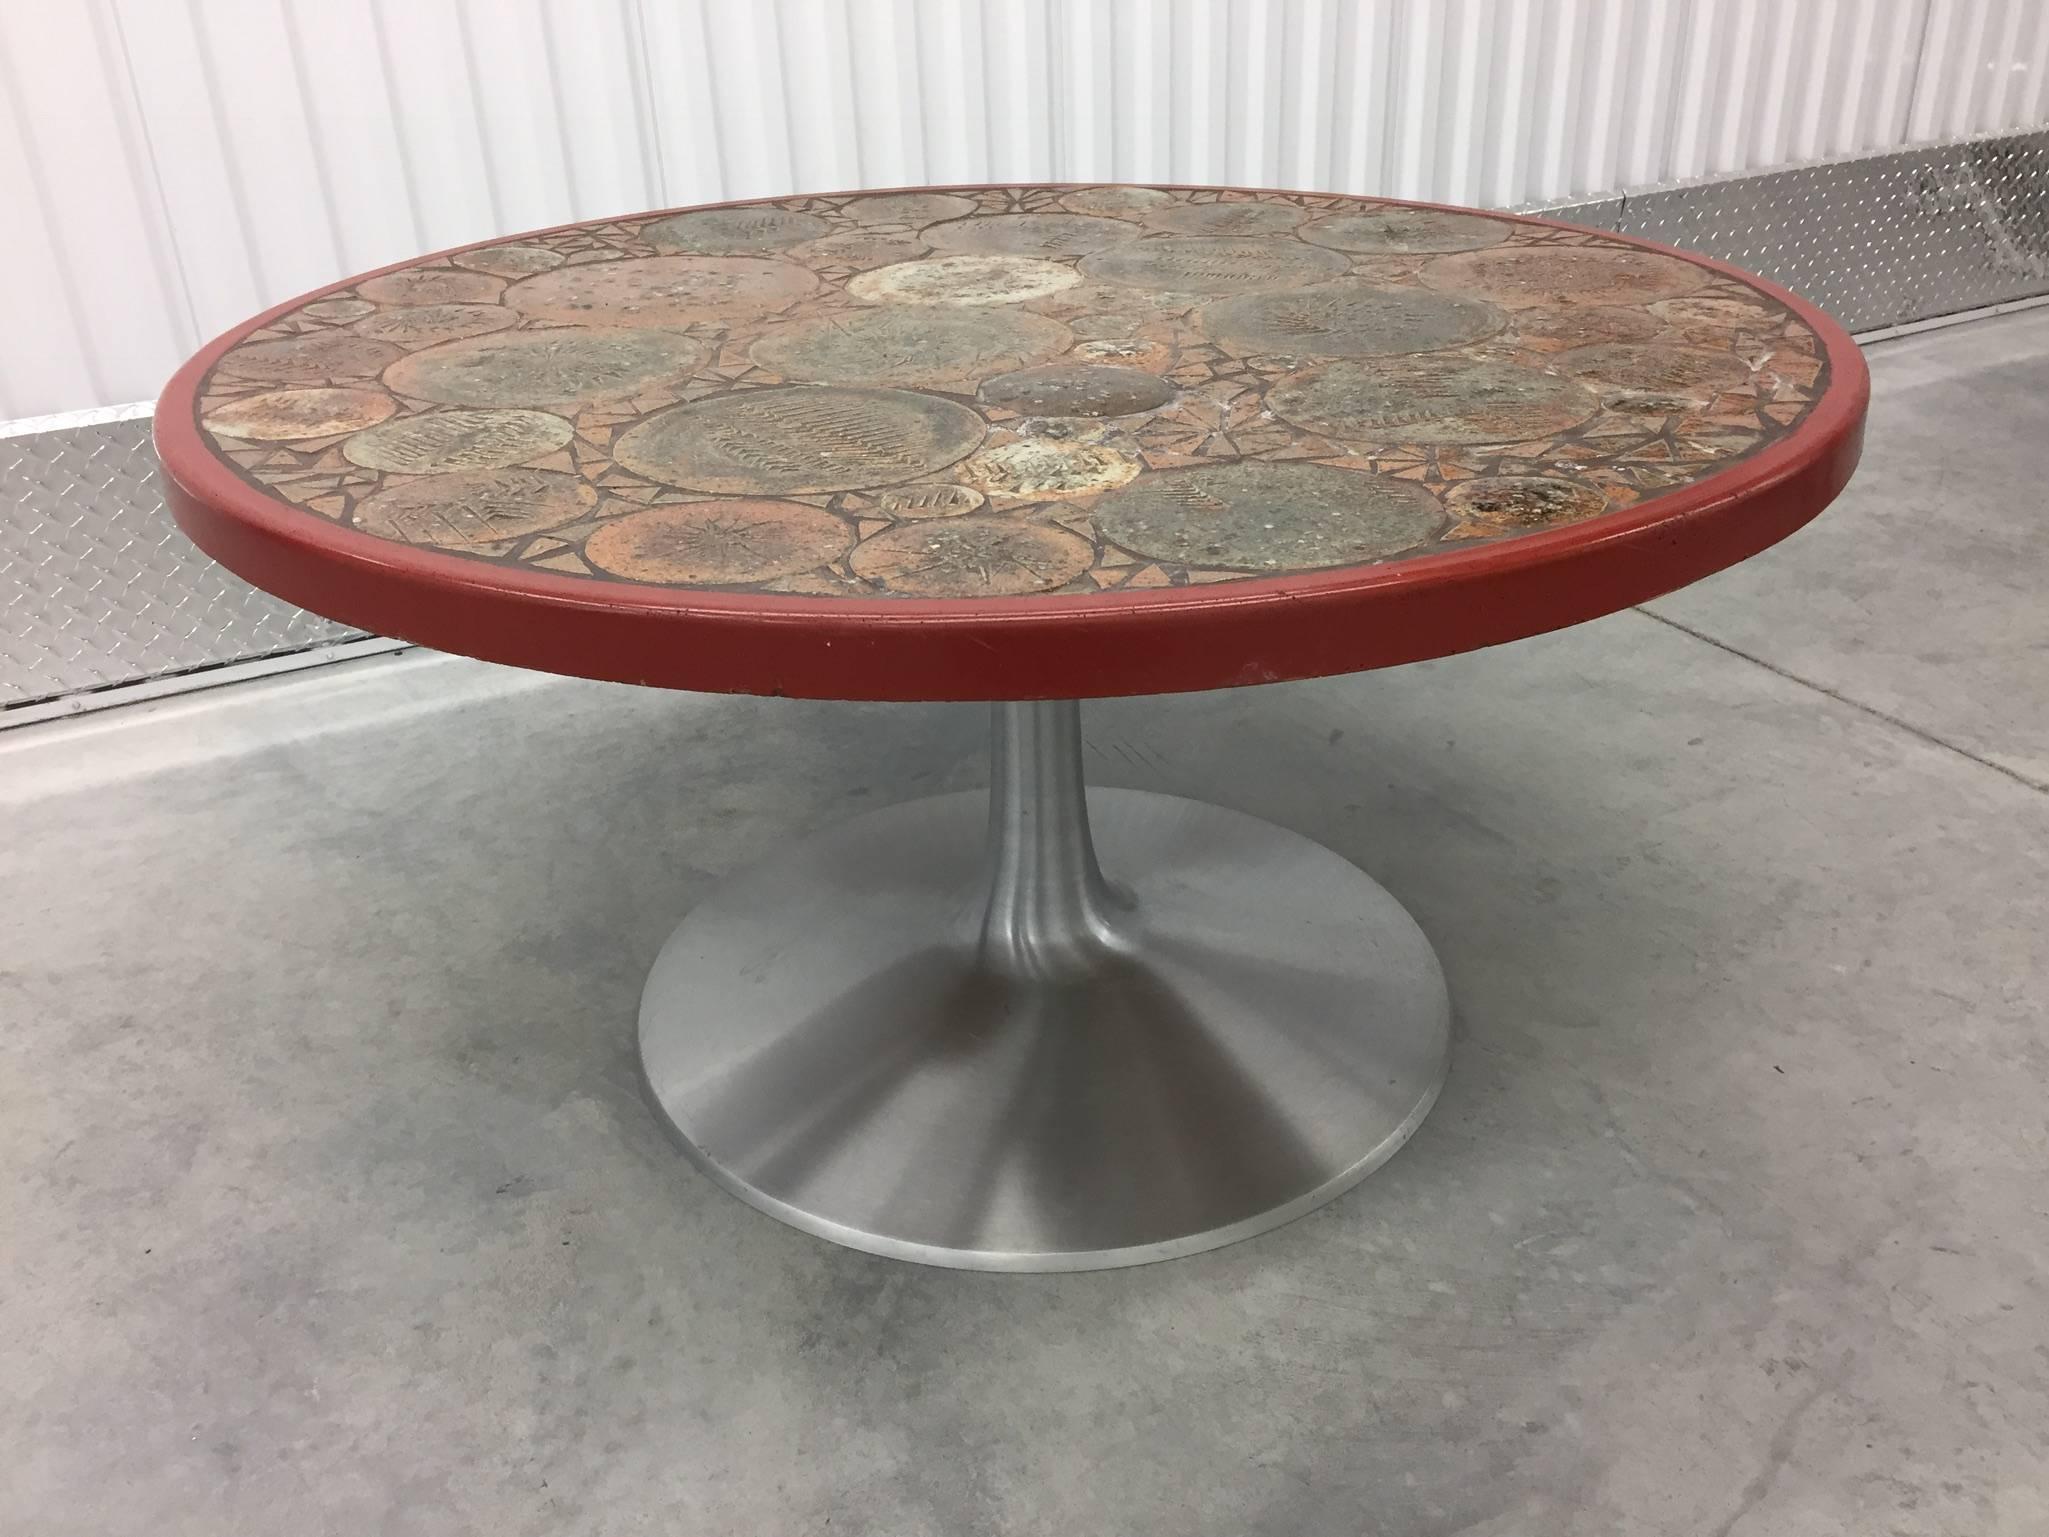 Danish Tue Poulsen Circular Coffee Table with Art Tile Inlay, Denmark, circa 1960s For Sale